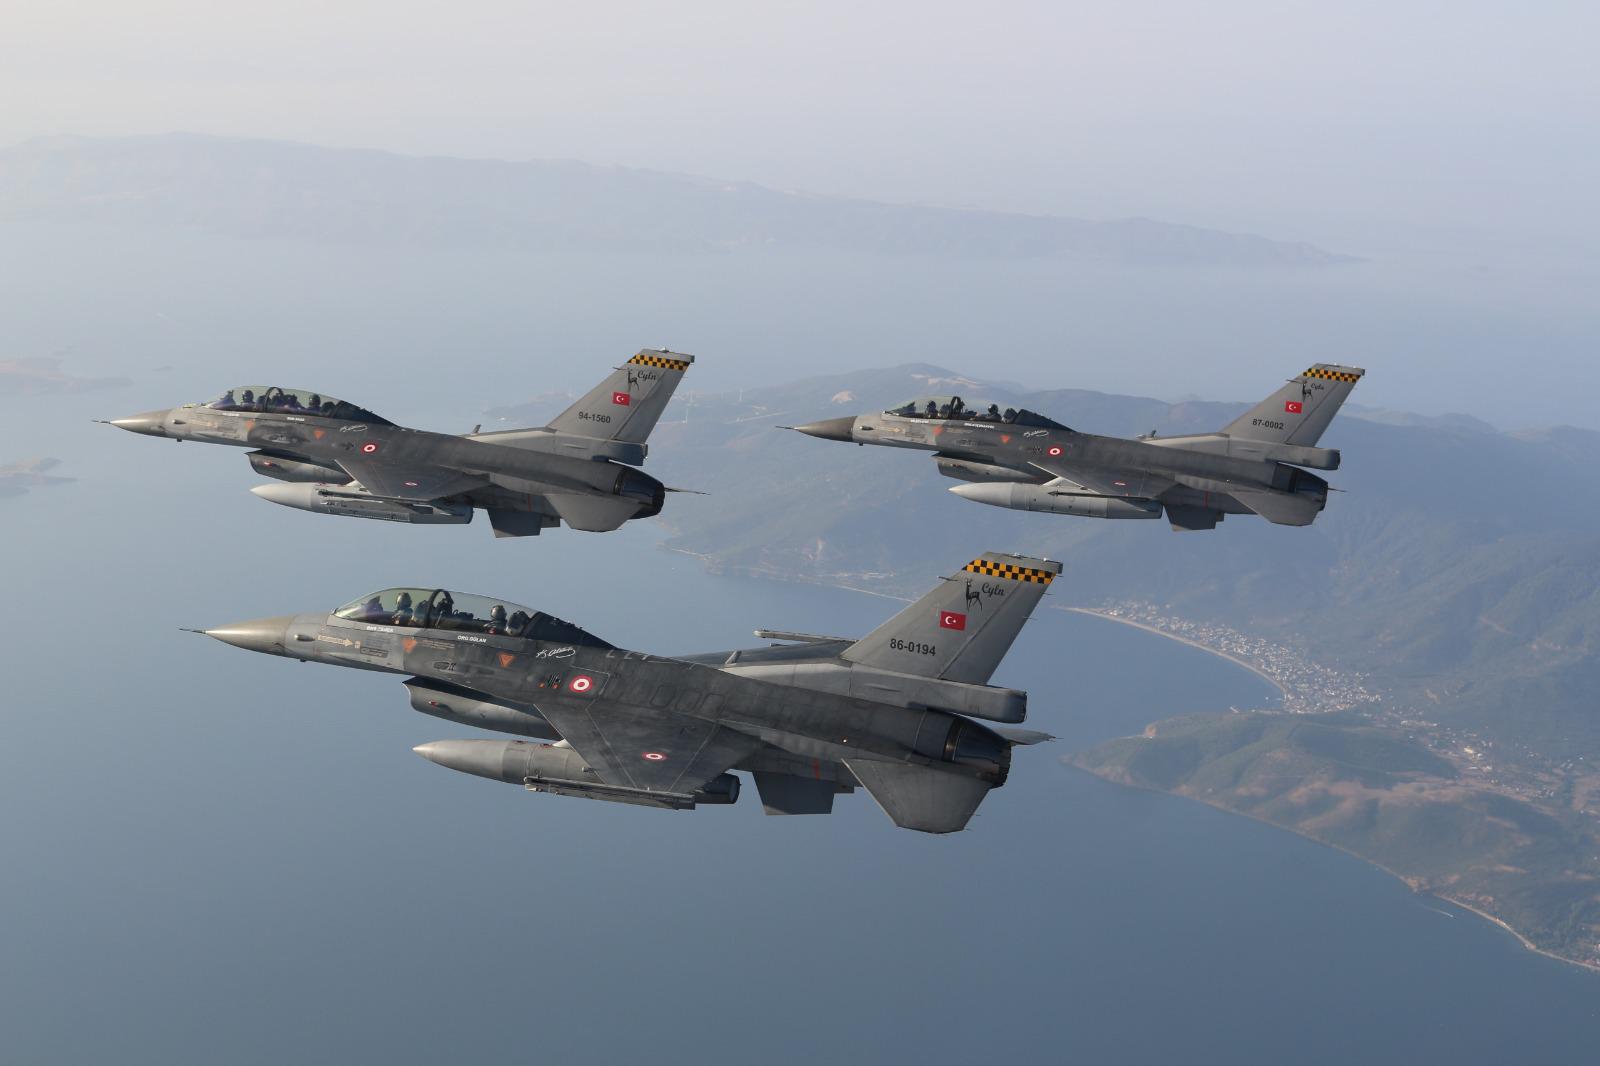 O Χουλουσί Ακάρ πετάει με F16 και απειλεί Γαλλία – ΗΠΑ: «Όσοι παίζουν τον ρόλο του προστάτη στην Αν. Μεσόγειο θα φύγουν όπως ήρθαν»